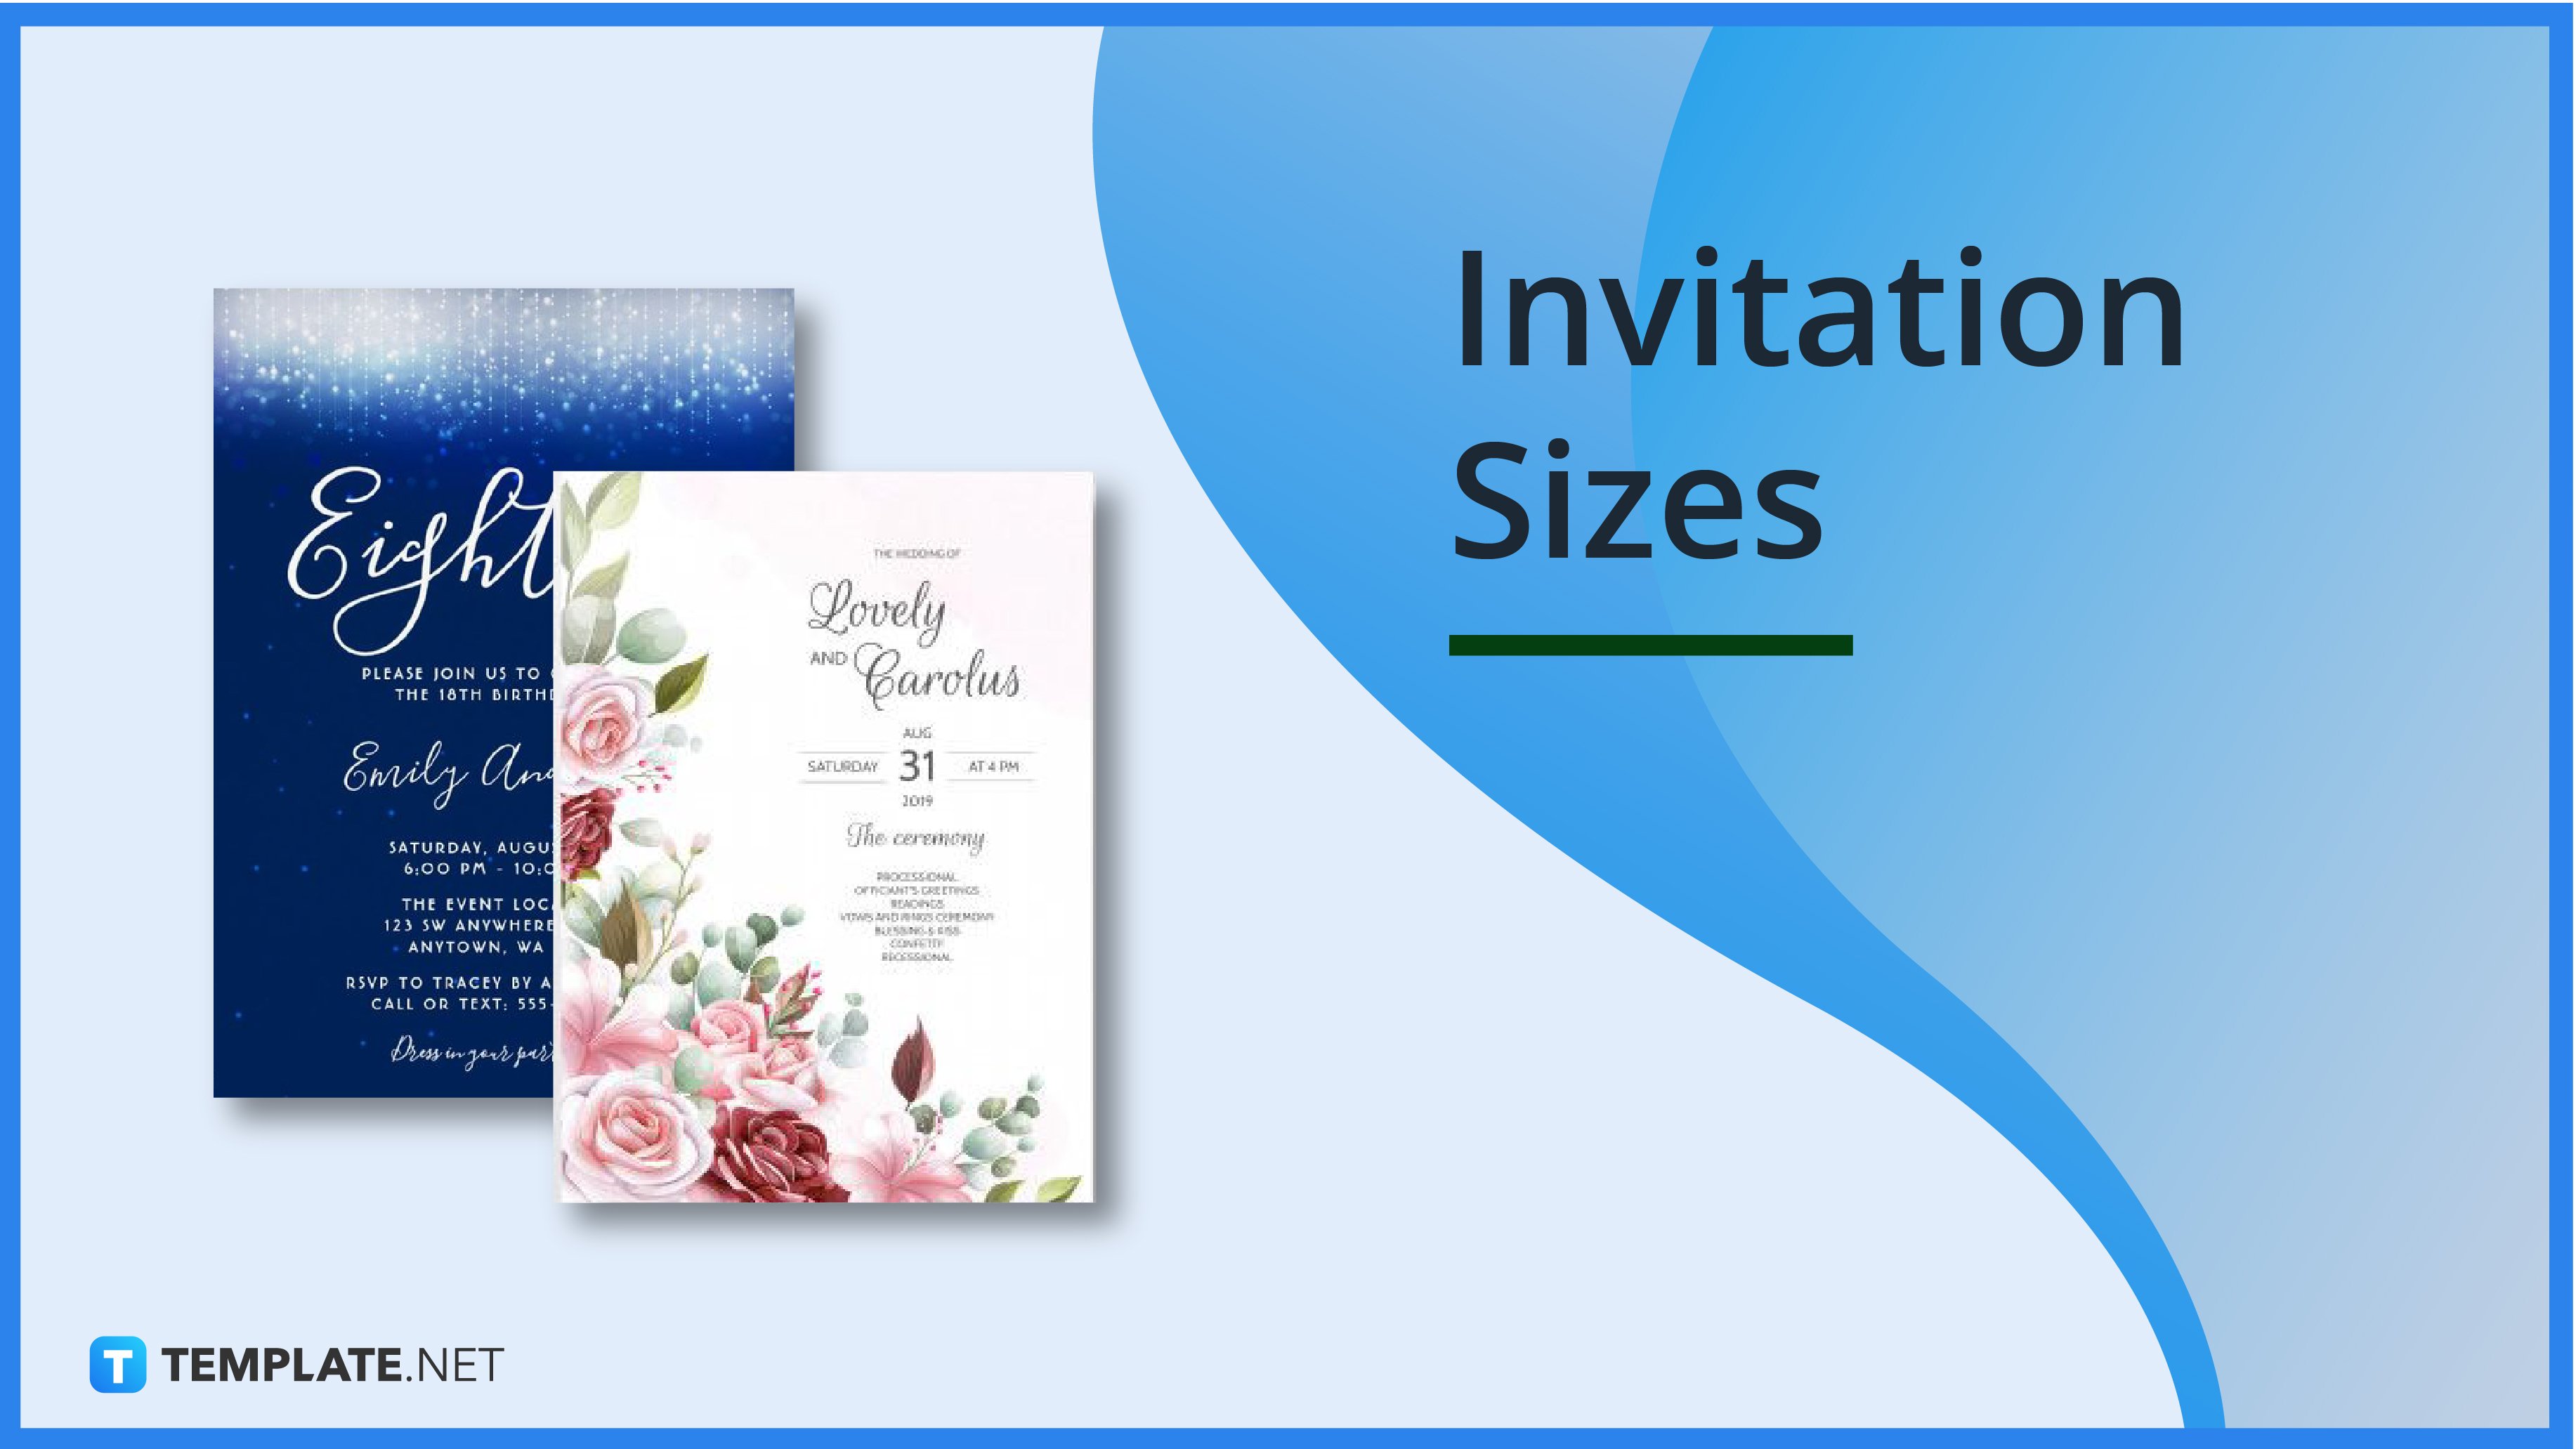 invitation-sizes-01